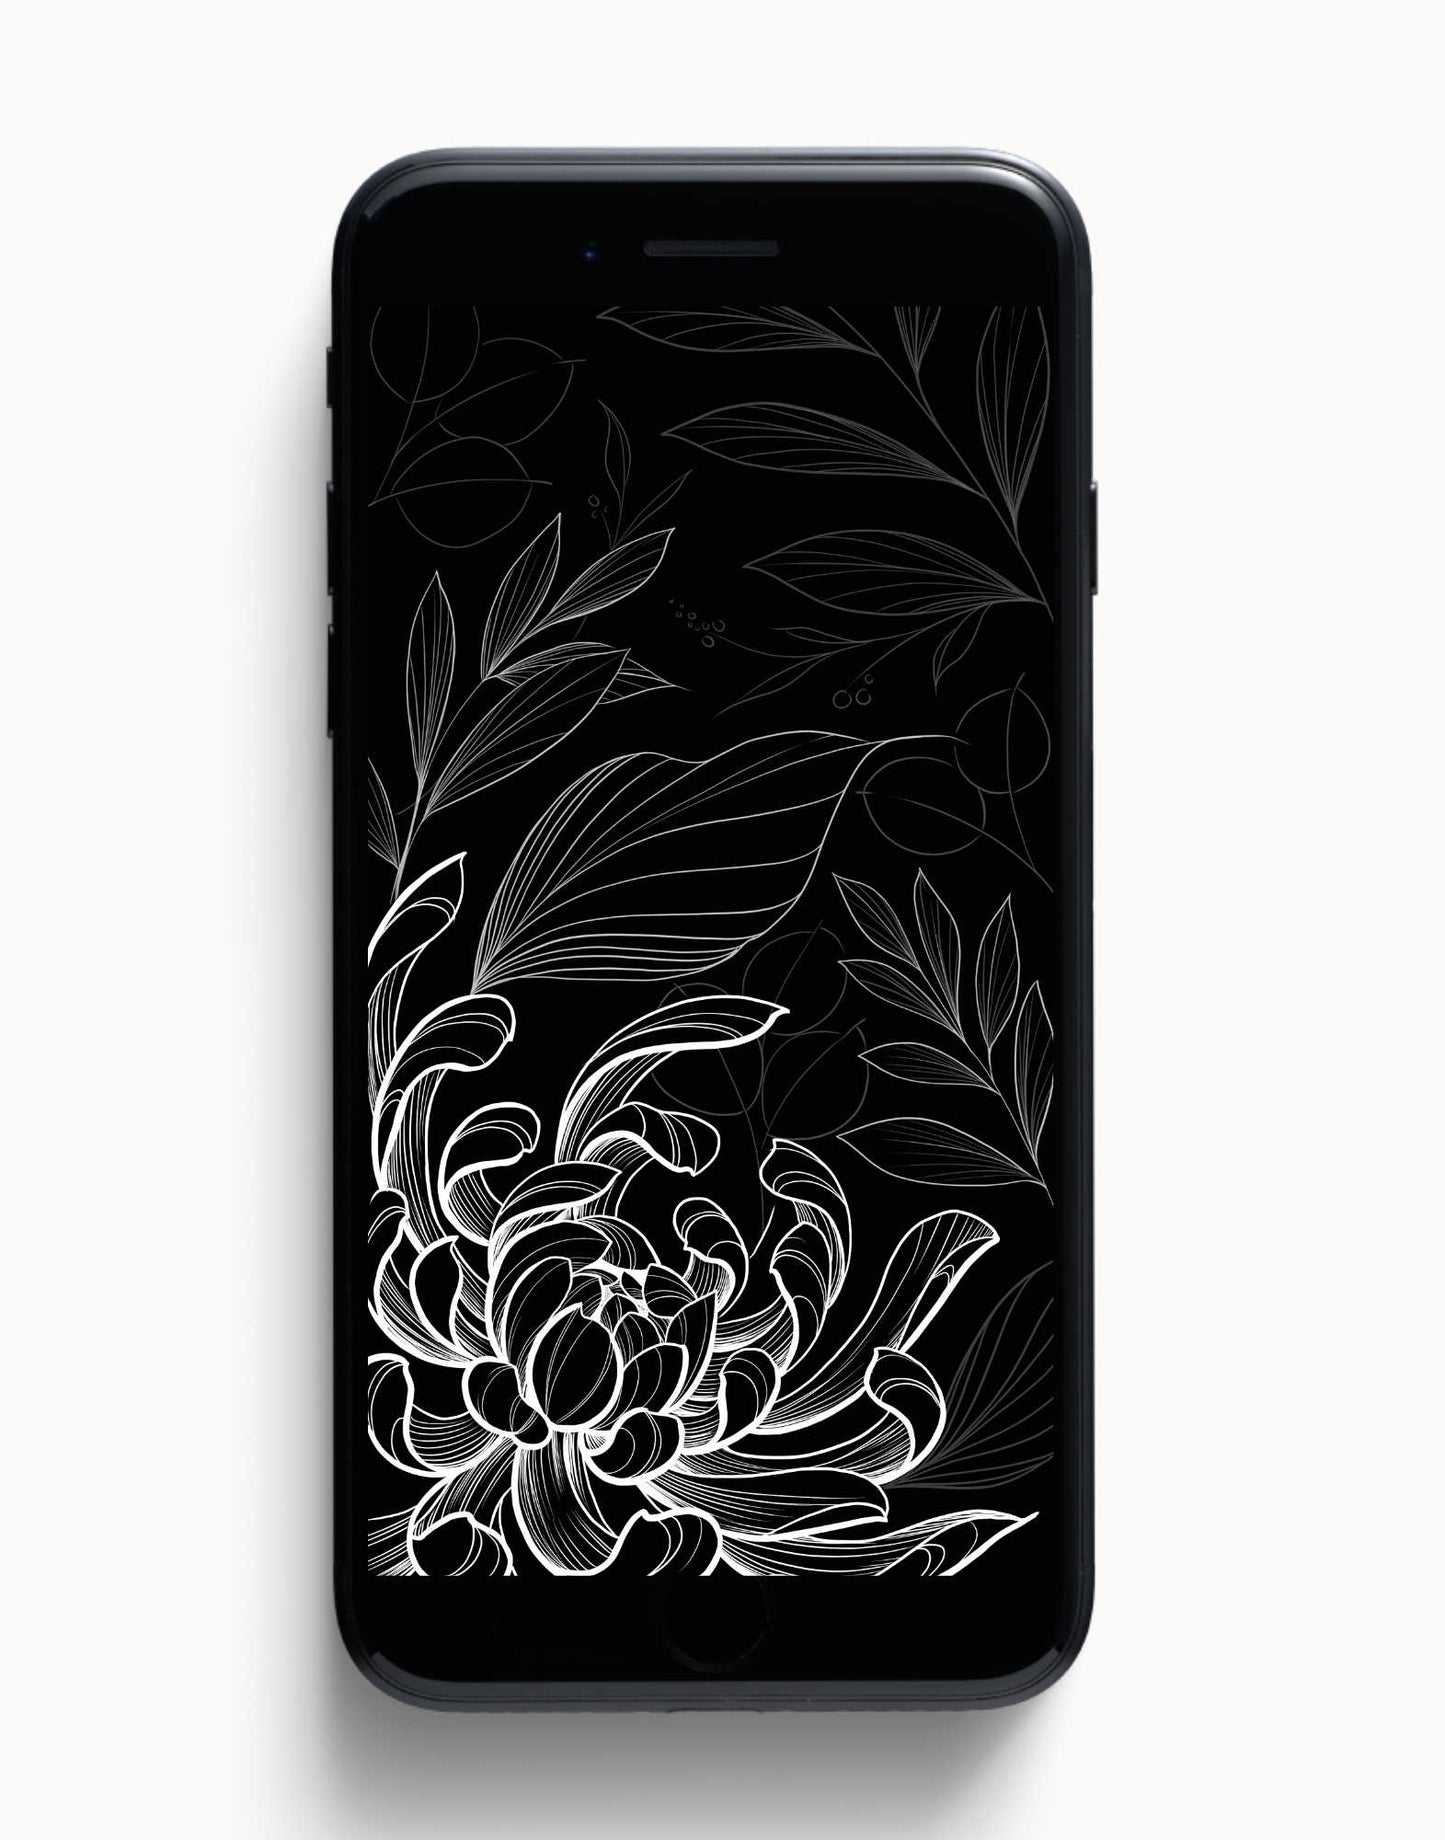 Delicate Chrysanthemum illustration phone background, white florals on black, by Lu Loram-Martin. Toronto tattoo artist and illustrator